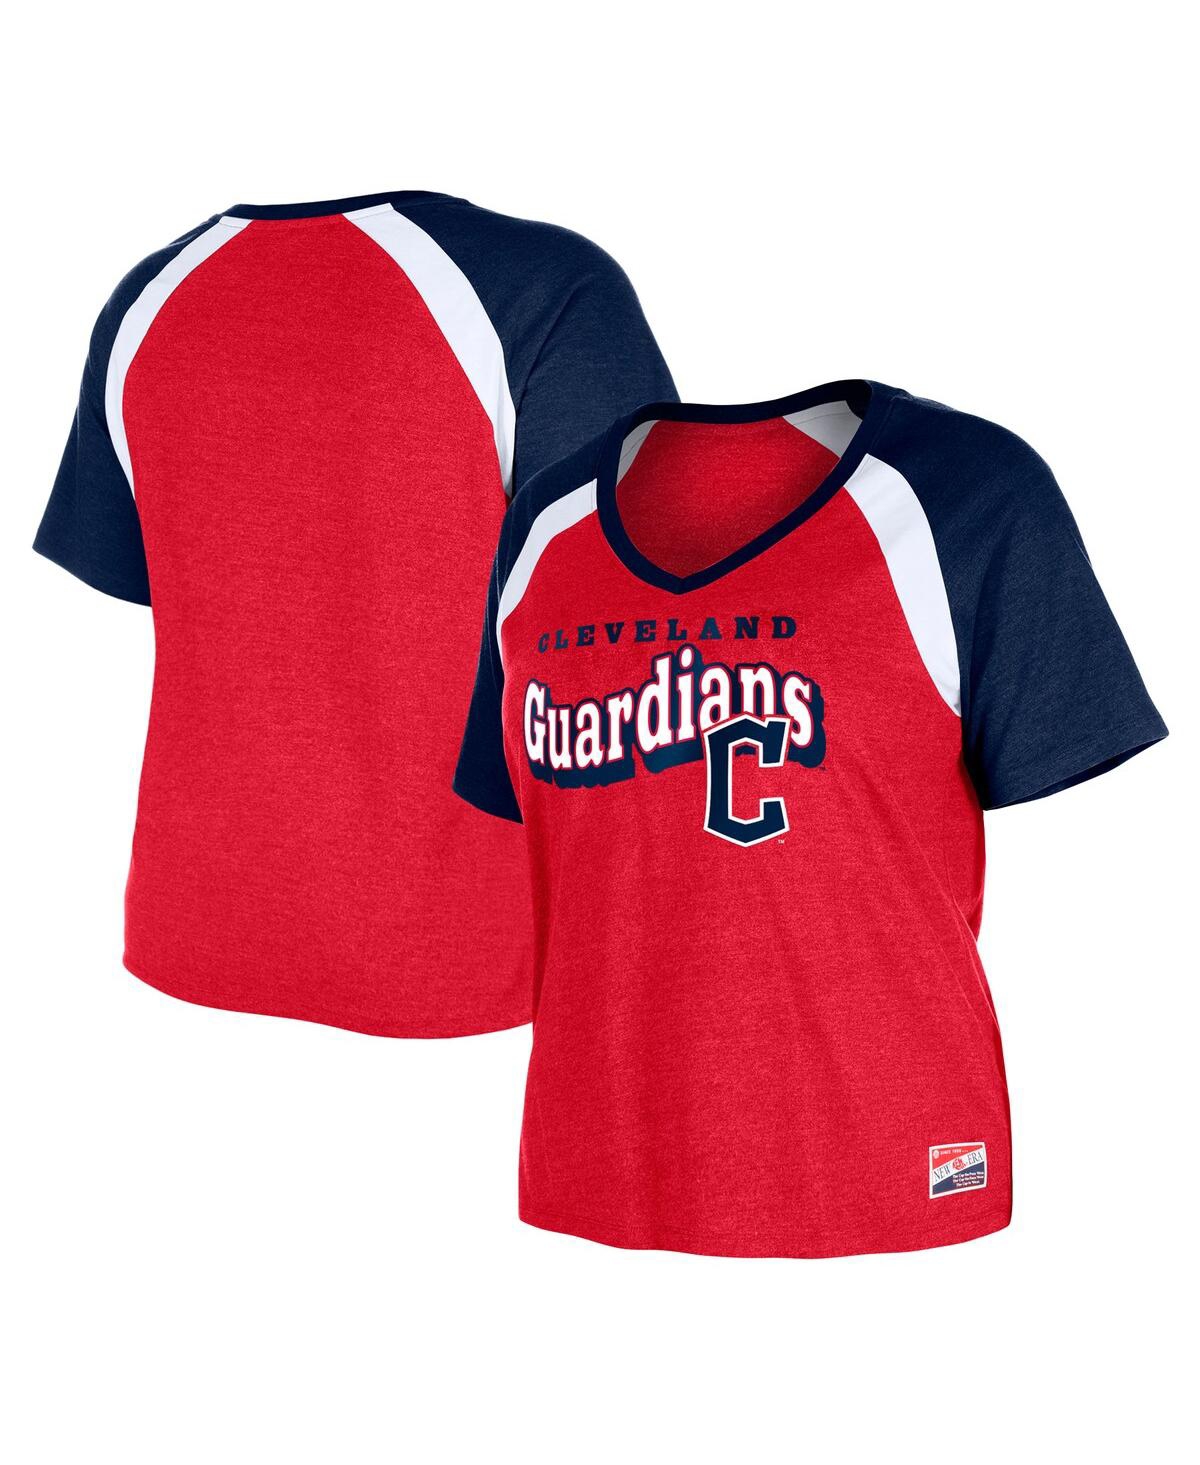 Women's Red Cleveland Guardians Plus Size Raglan V-Neck T-Shirt - Red